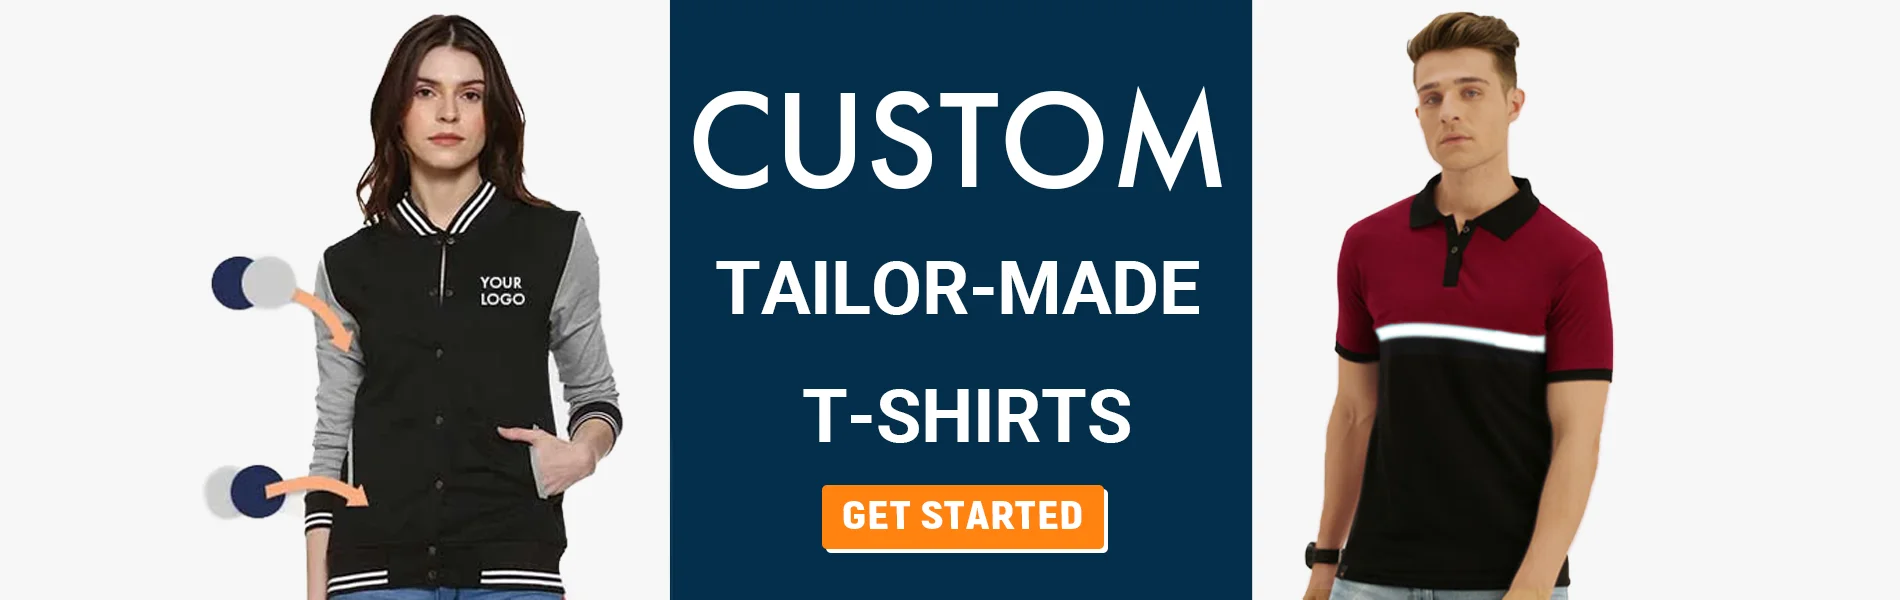 custom tailormade t-shirts mumbai